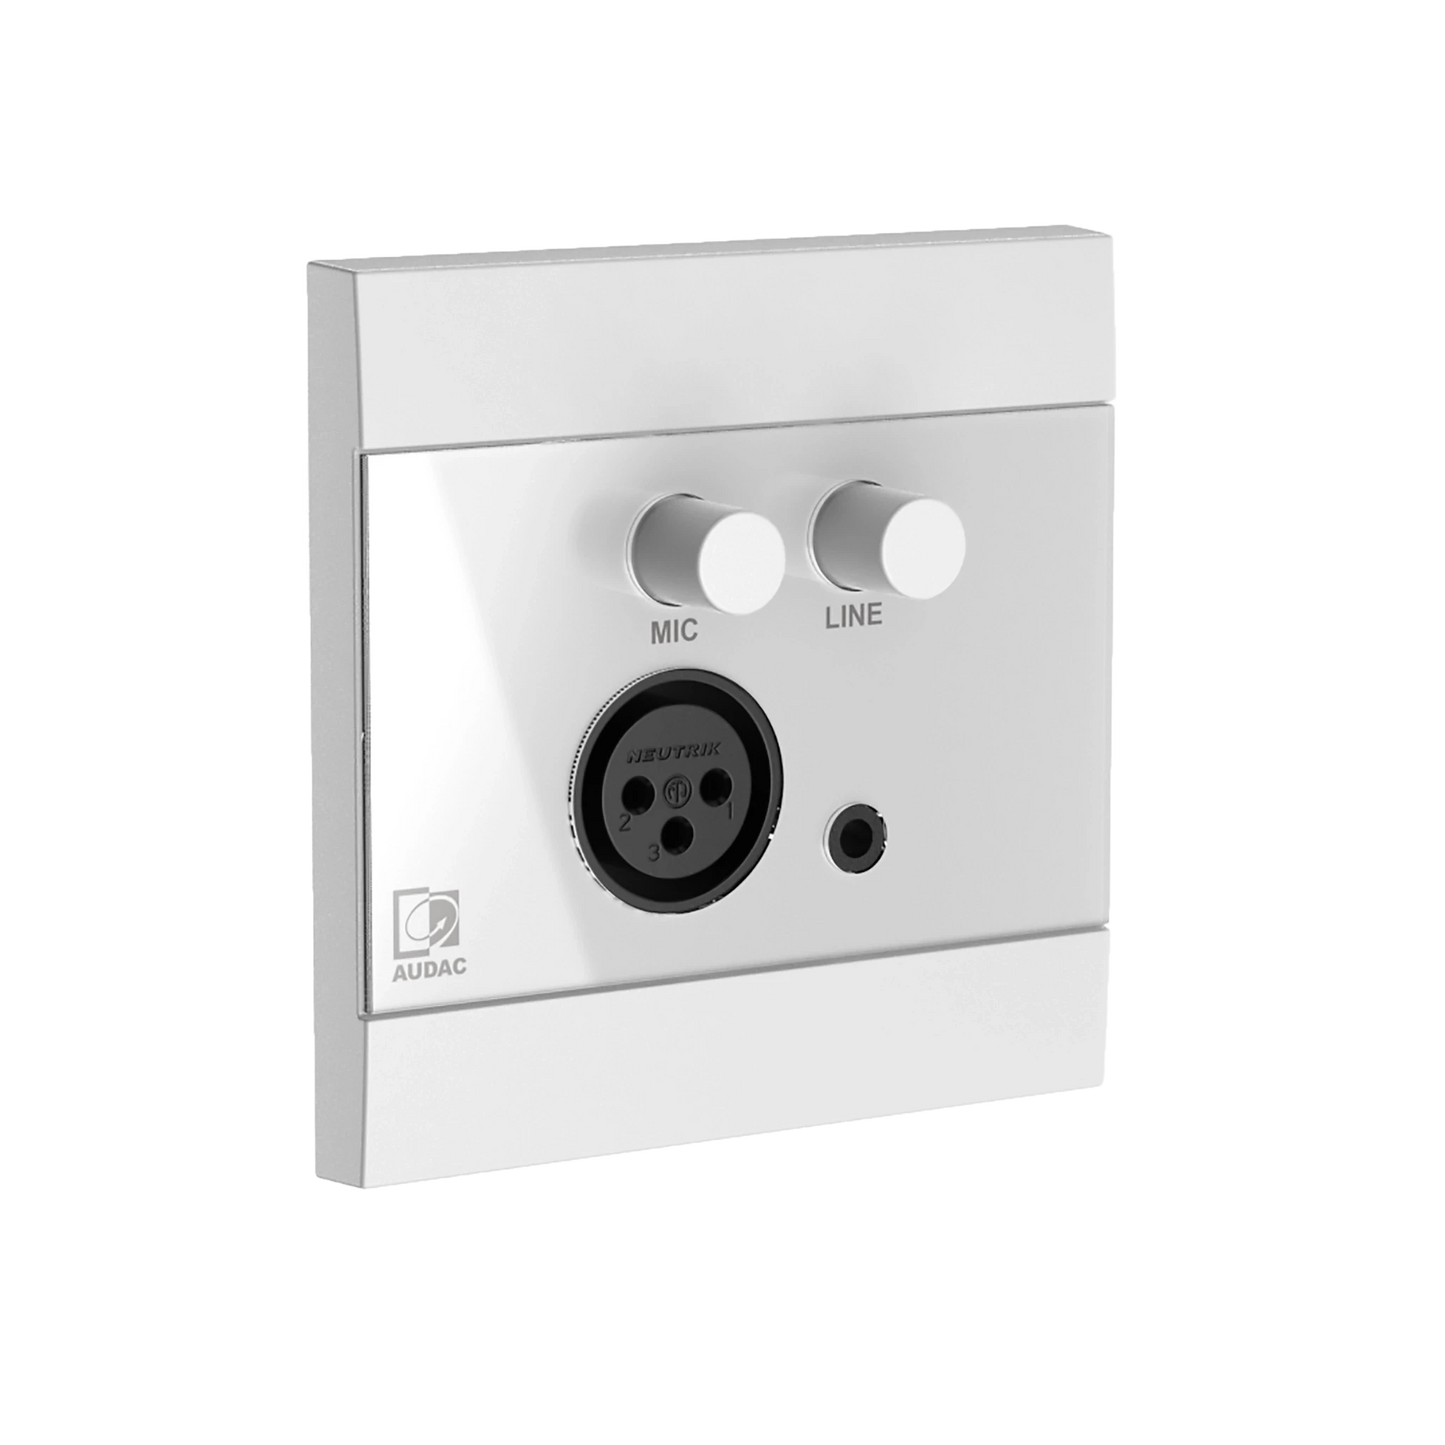 WP210/W Universal wall panel - Microphone & line input - 80 x 80 mm, White